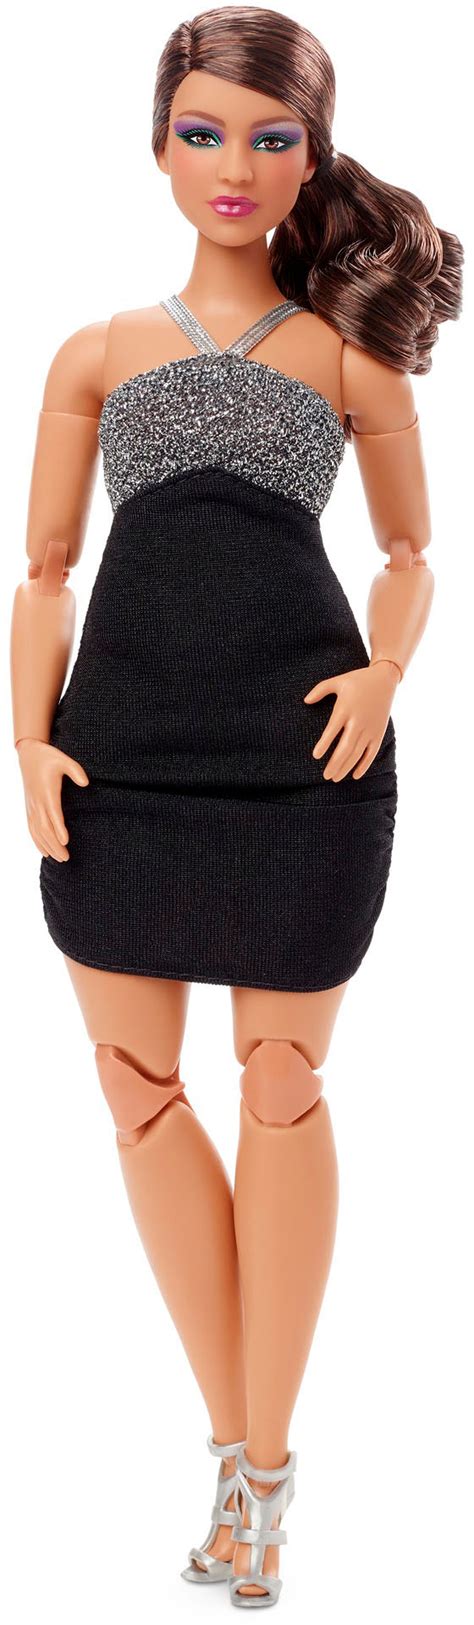 Customer Reviews Barbie Signature Looks 115 Brunette Curvy Doll